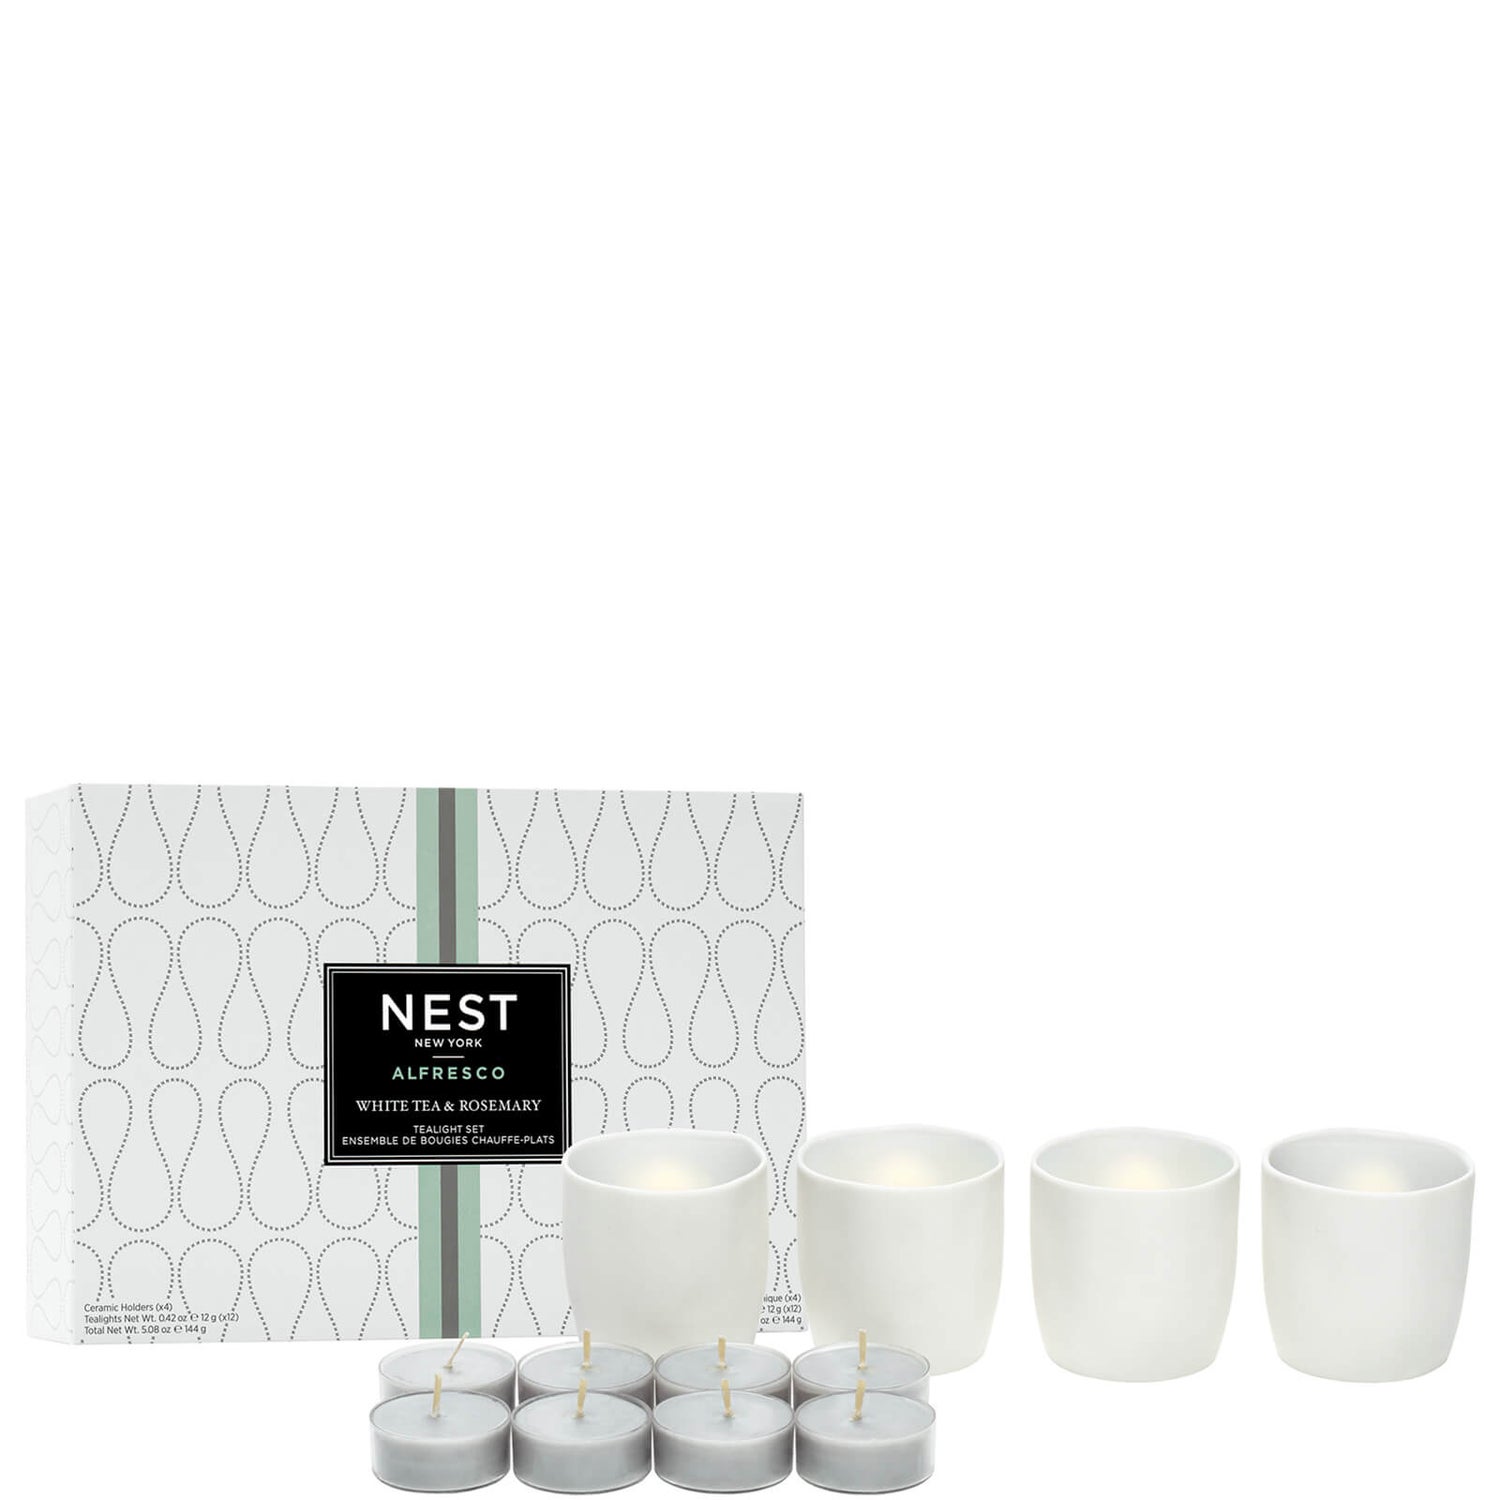 NEST New York White Tea and Rosemary Alfresco Tealight Holders Tealights Set